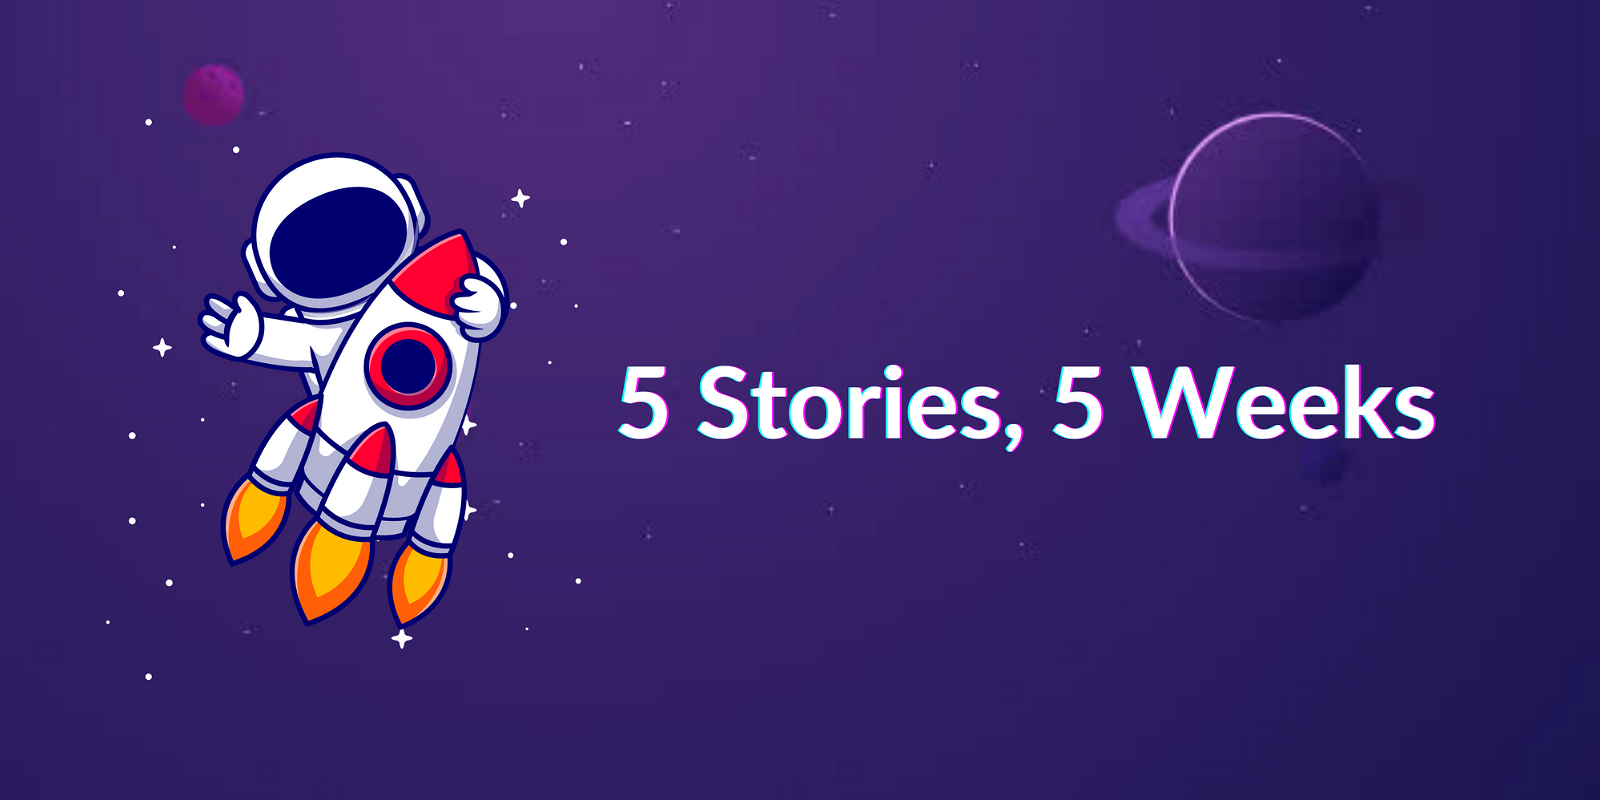 5 Stories, 5 Weeks - Issue #1